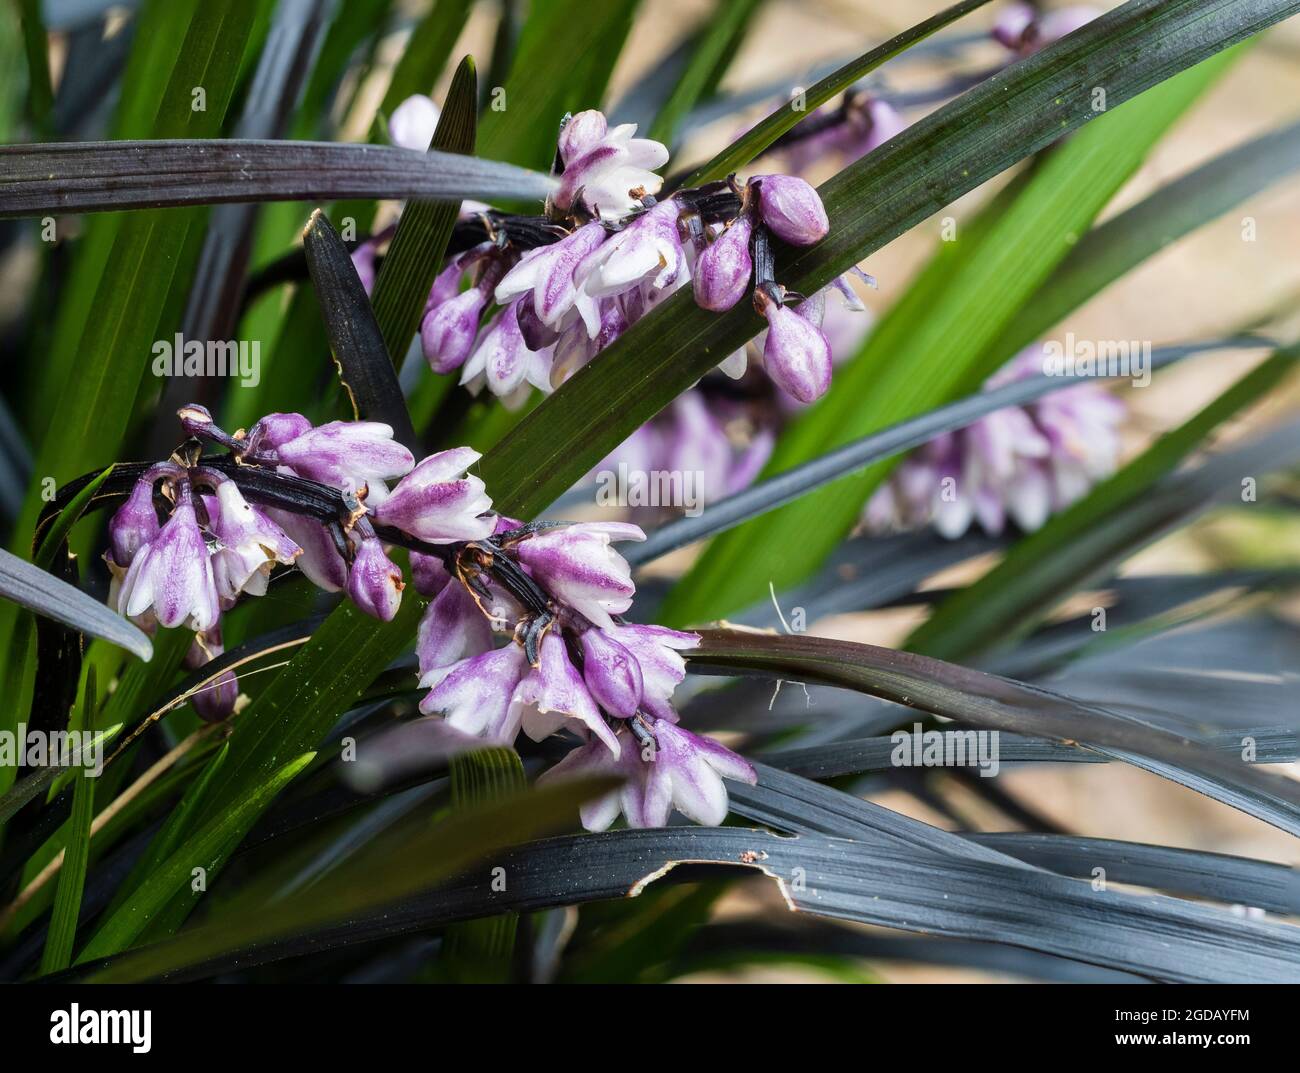 White and purple summer flowers of the hardy perennial black mondo grass, Ophiopogon planiscapus 'Nigrescens' Stock Photo